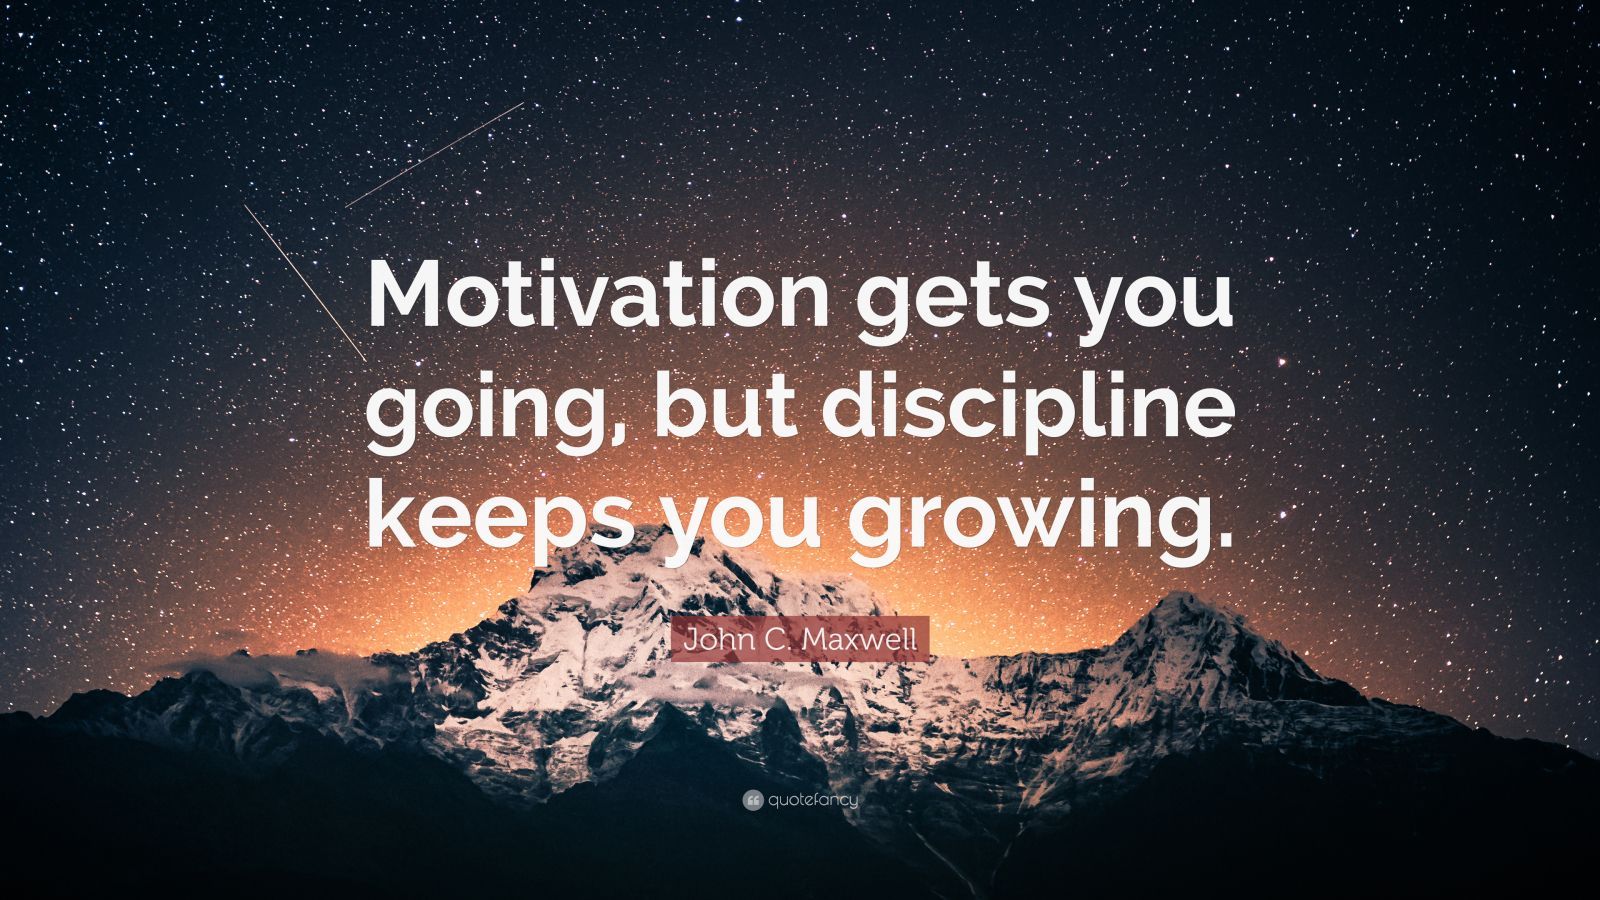 Business quotes about self discipline 36 inspirational quotes on self discipline awakenthegreatnesswithin